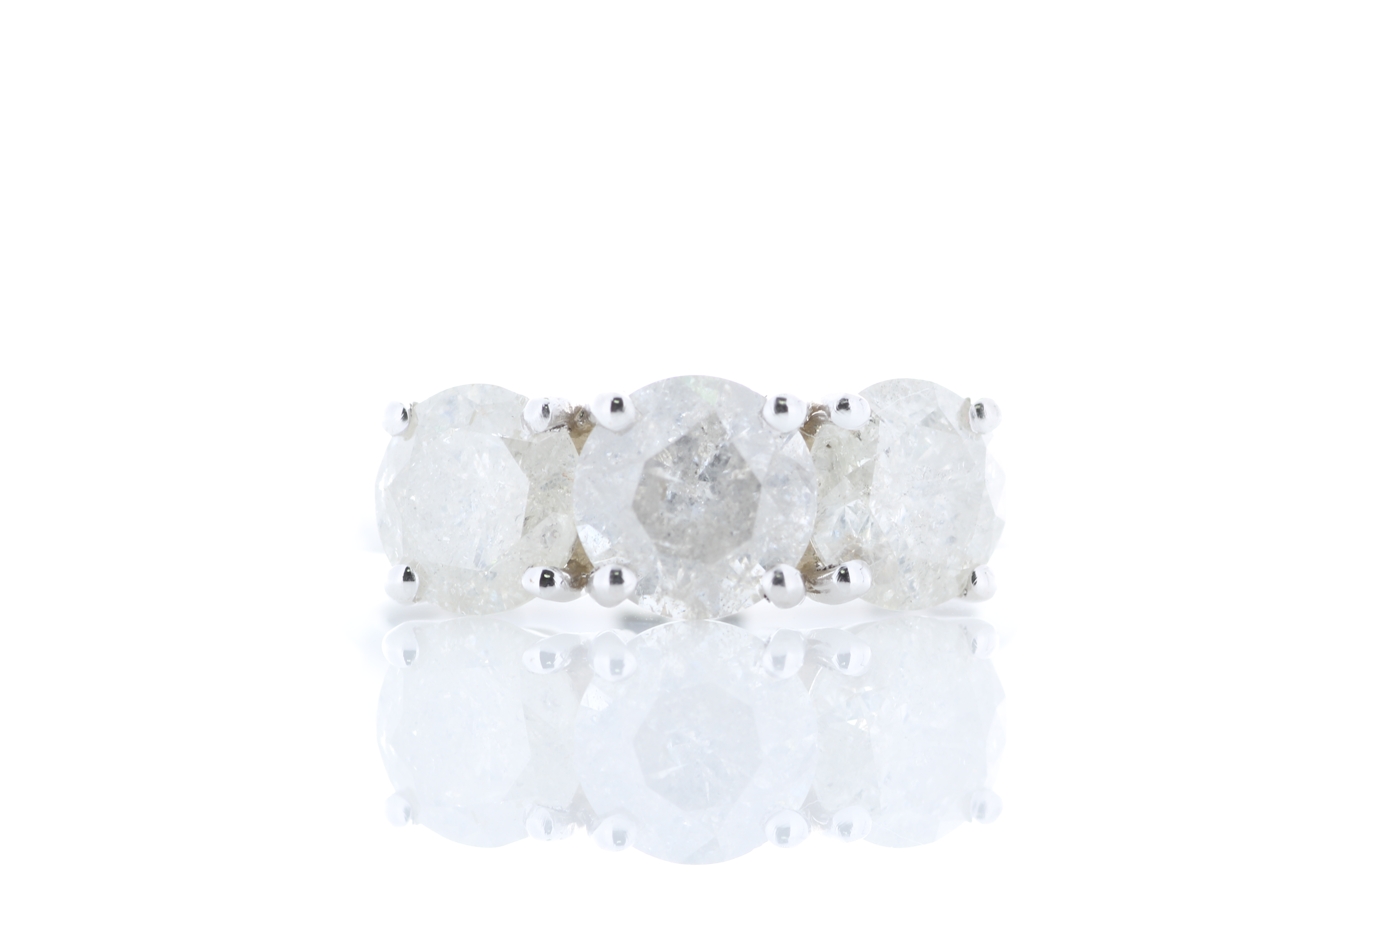 18ct White Gold Three Stone Diamond Ring 3.45 Carats - Image 2 of 4